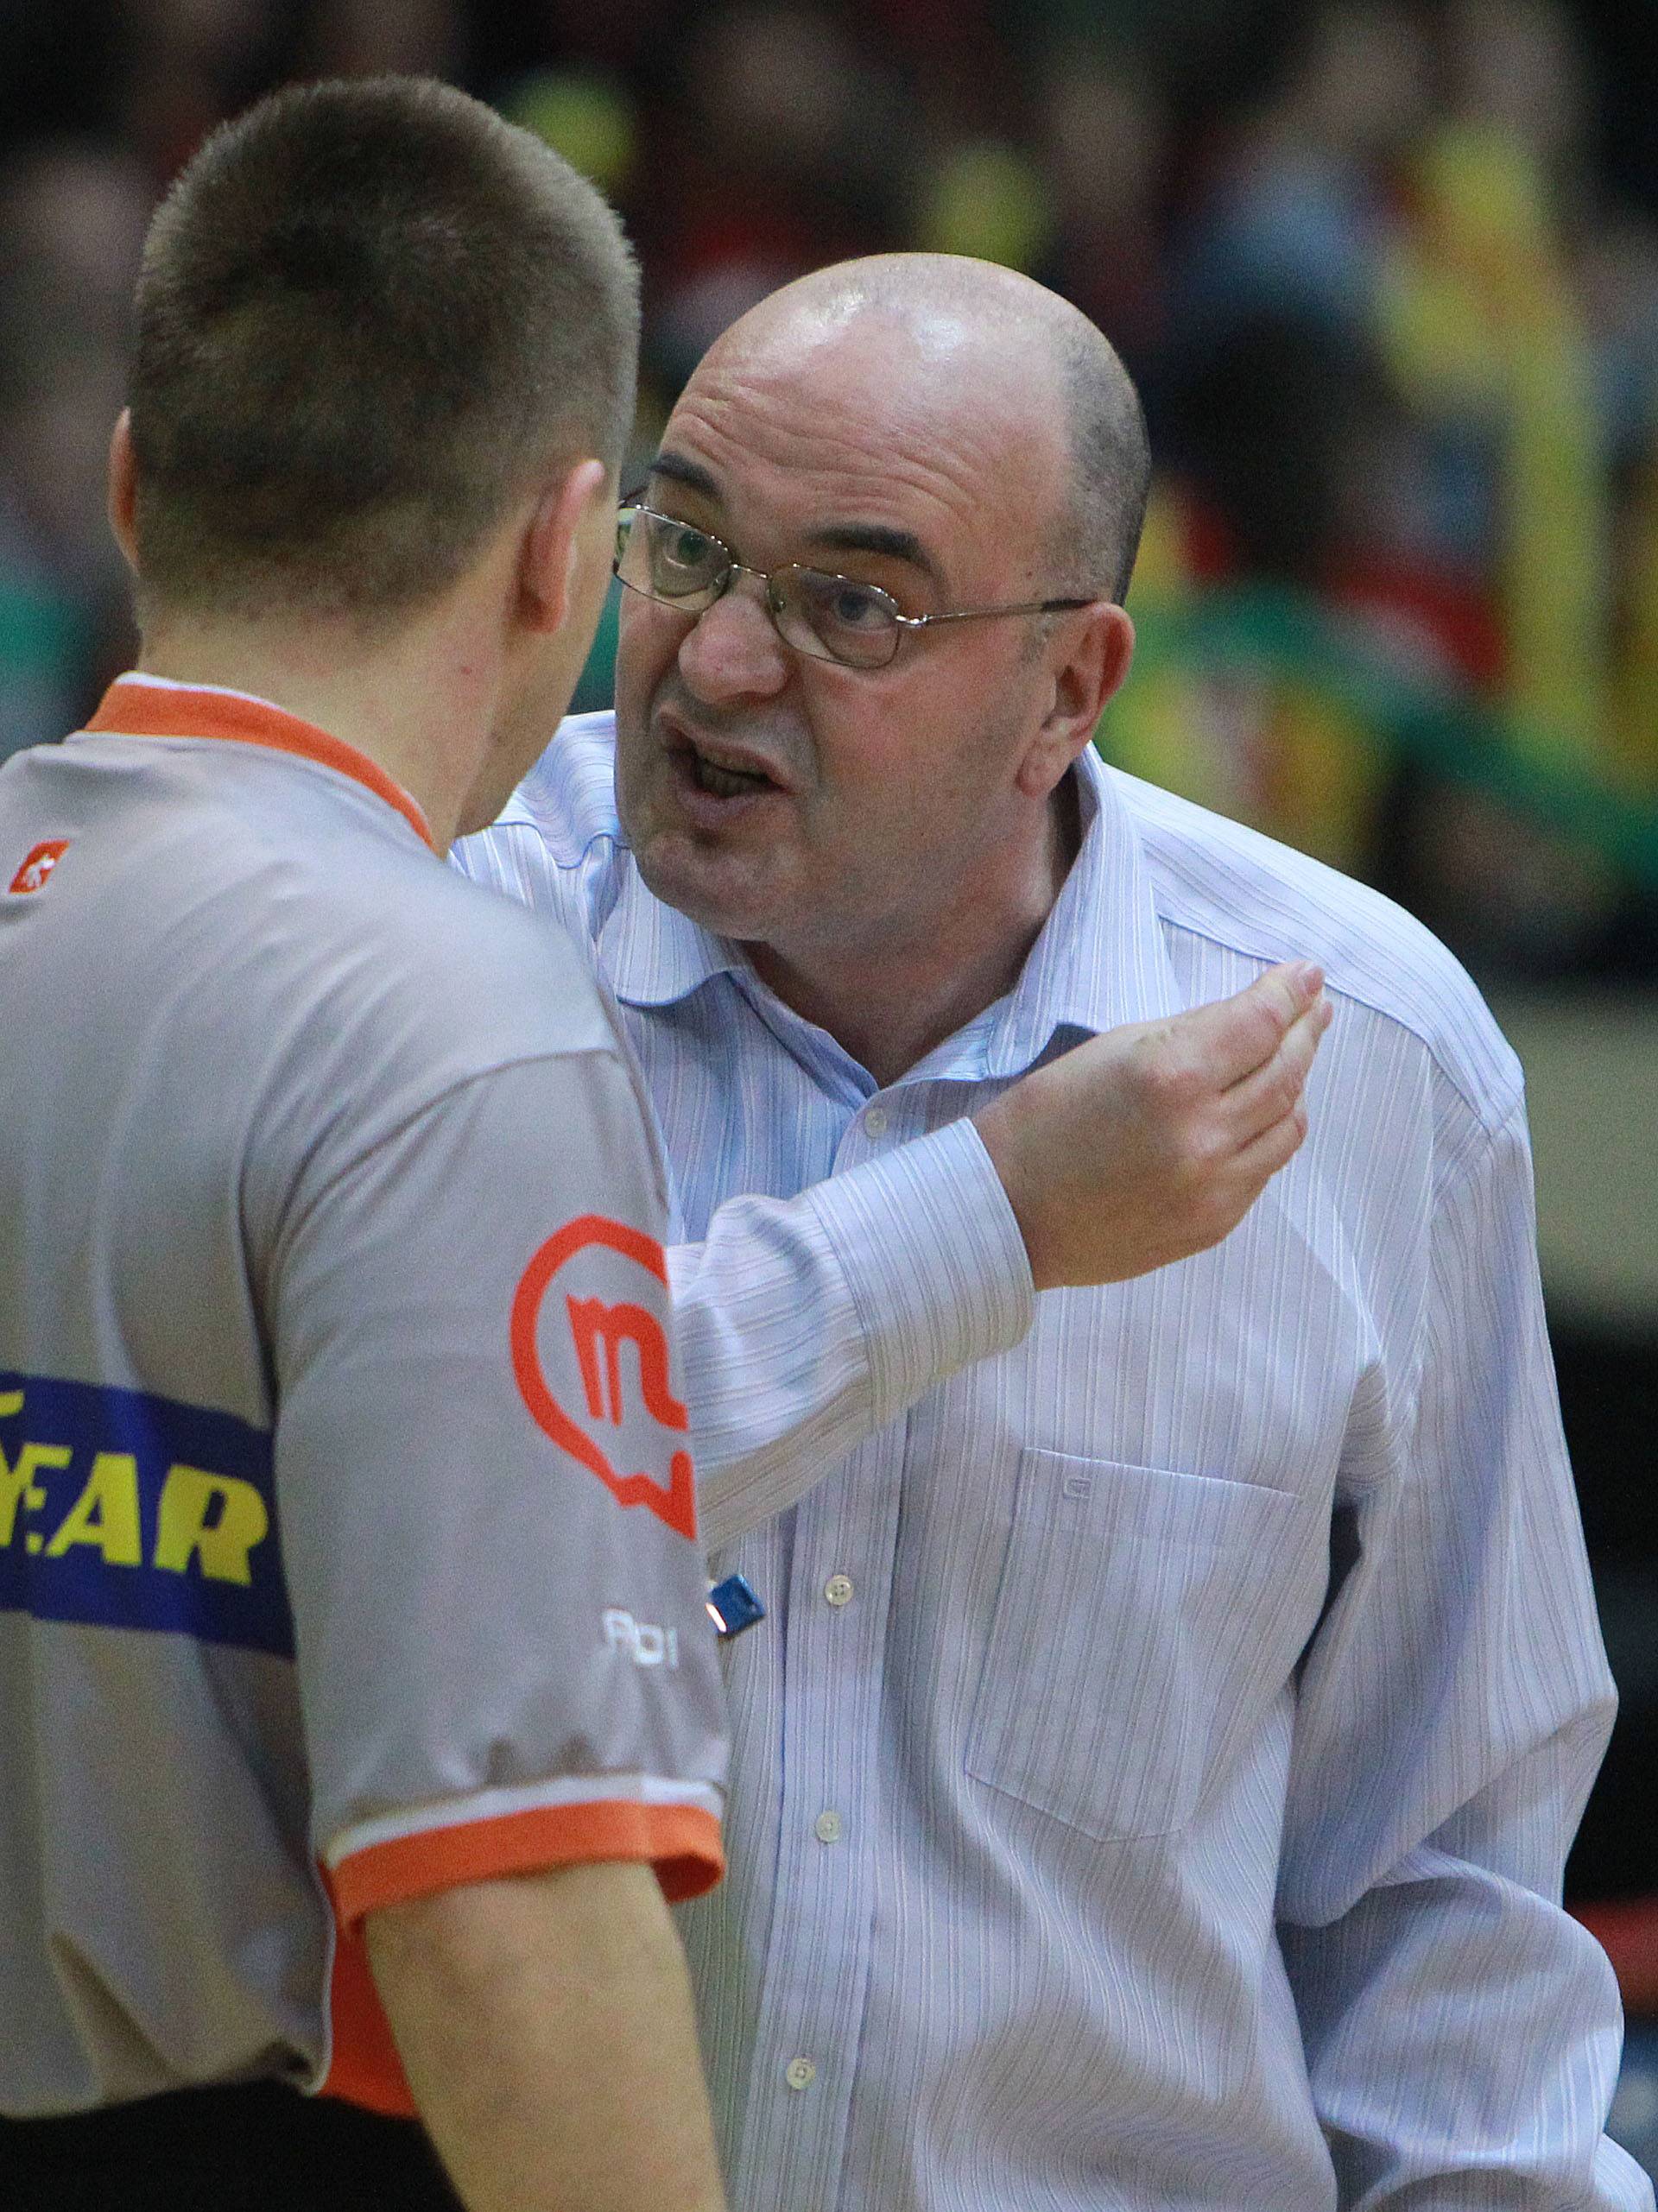 Legendarni košarkaški trener: Srbija je najveći krivac za rat